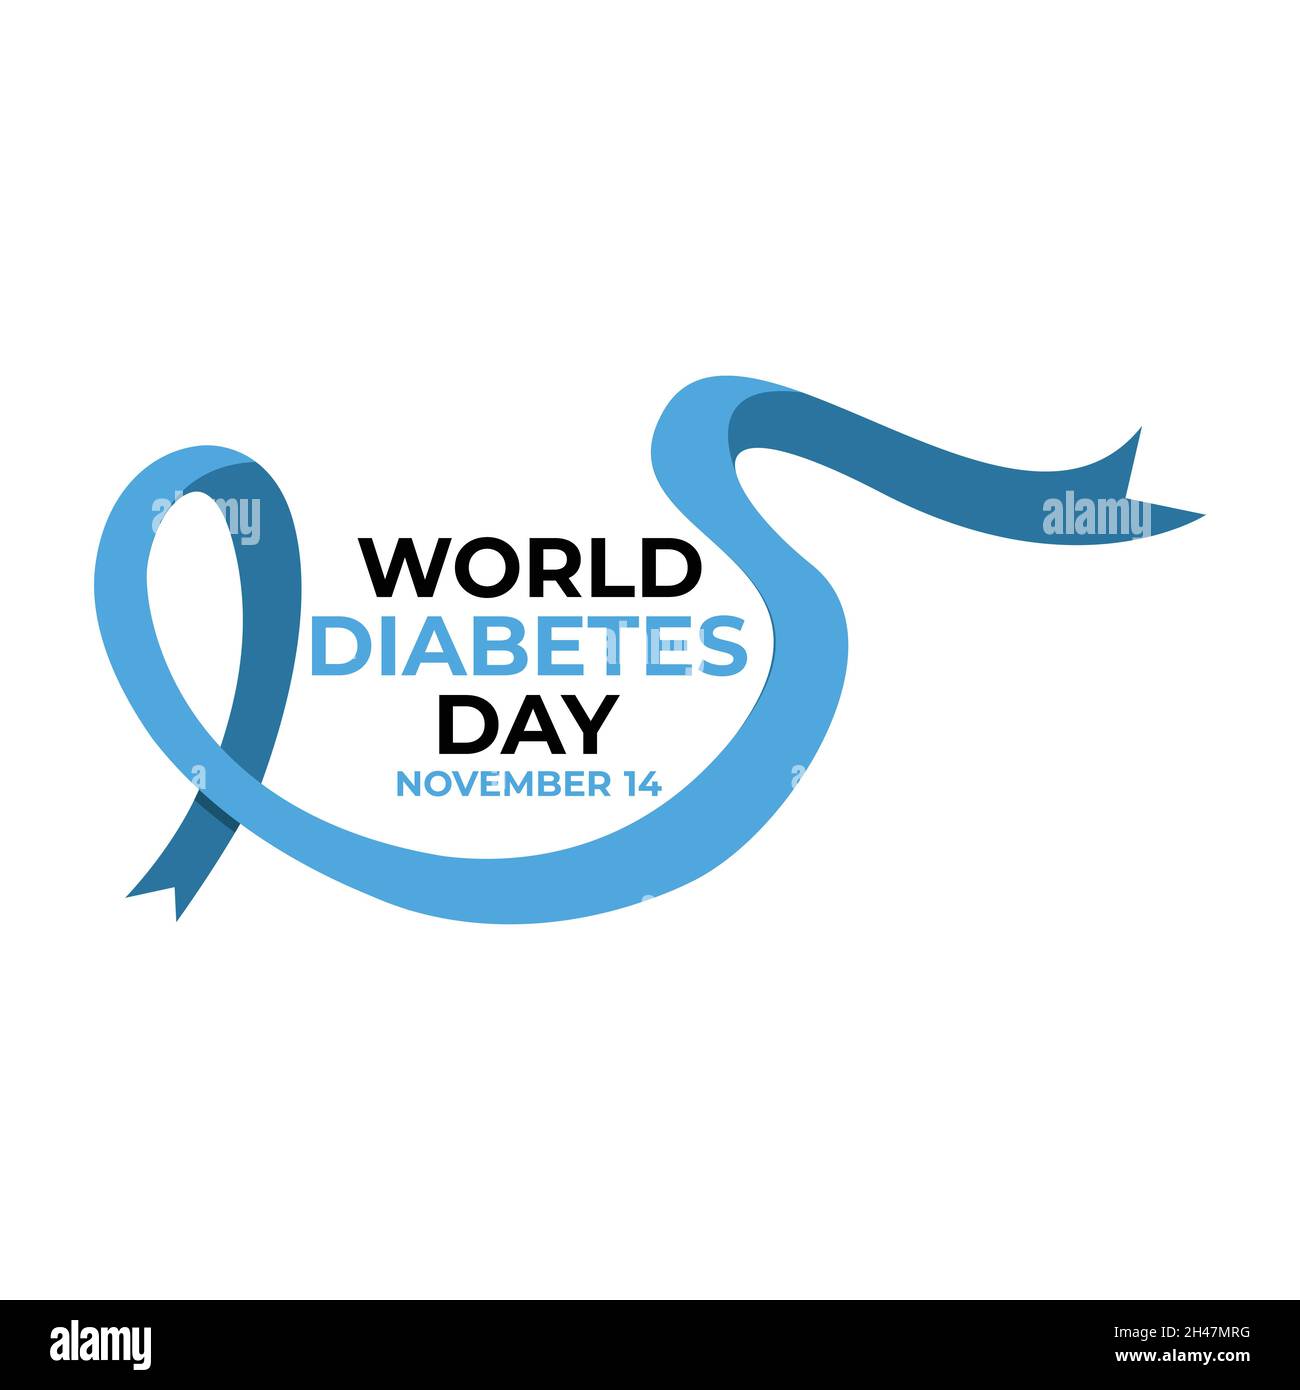 Plakat Design für World Diabetes Day Free Vector. Vector Illustration der  Welt Diabetes Tag Konzept Stock-Vektorgrafik - Alamy